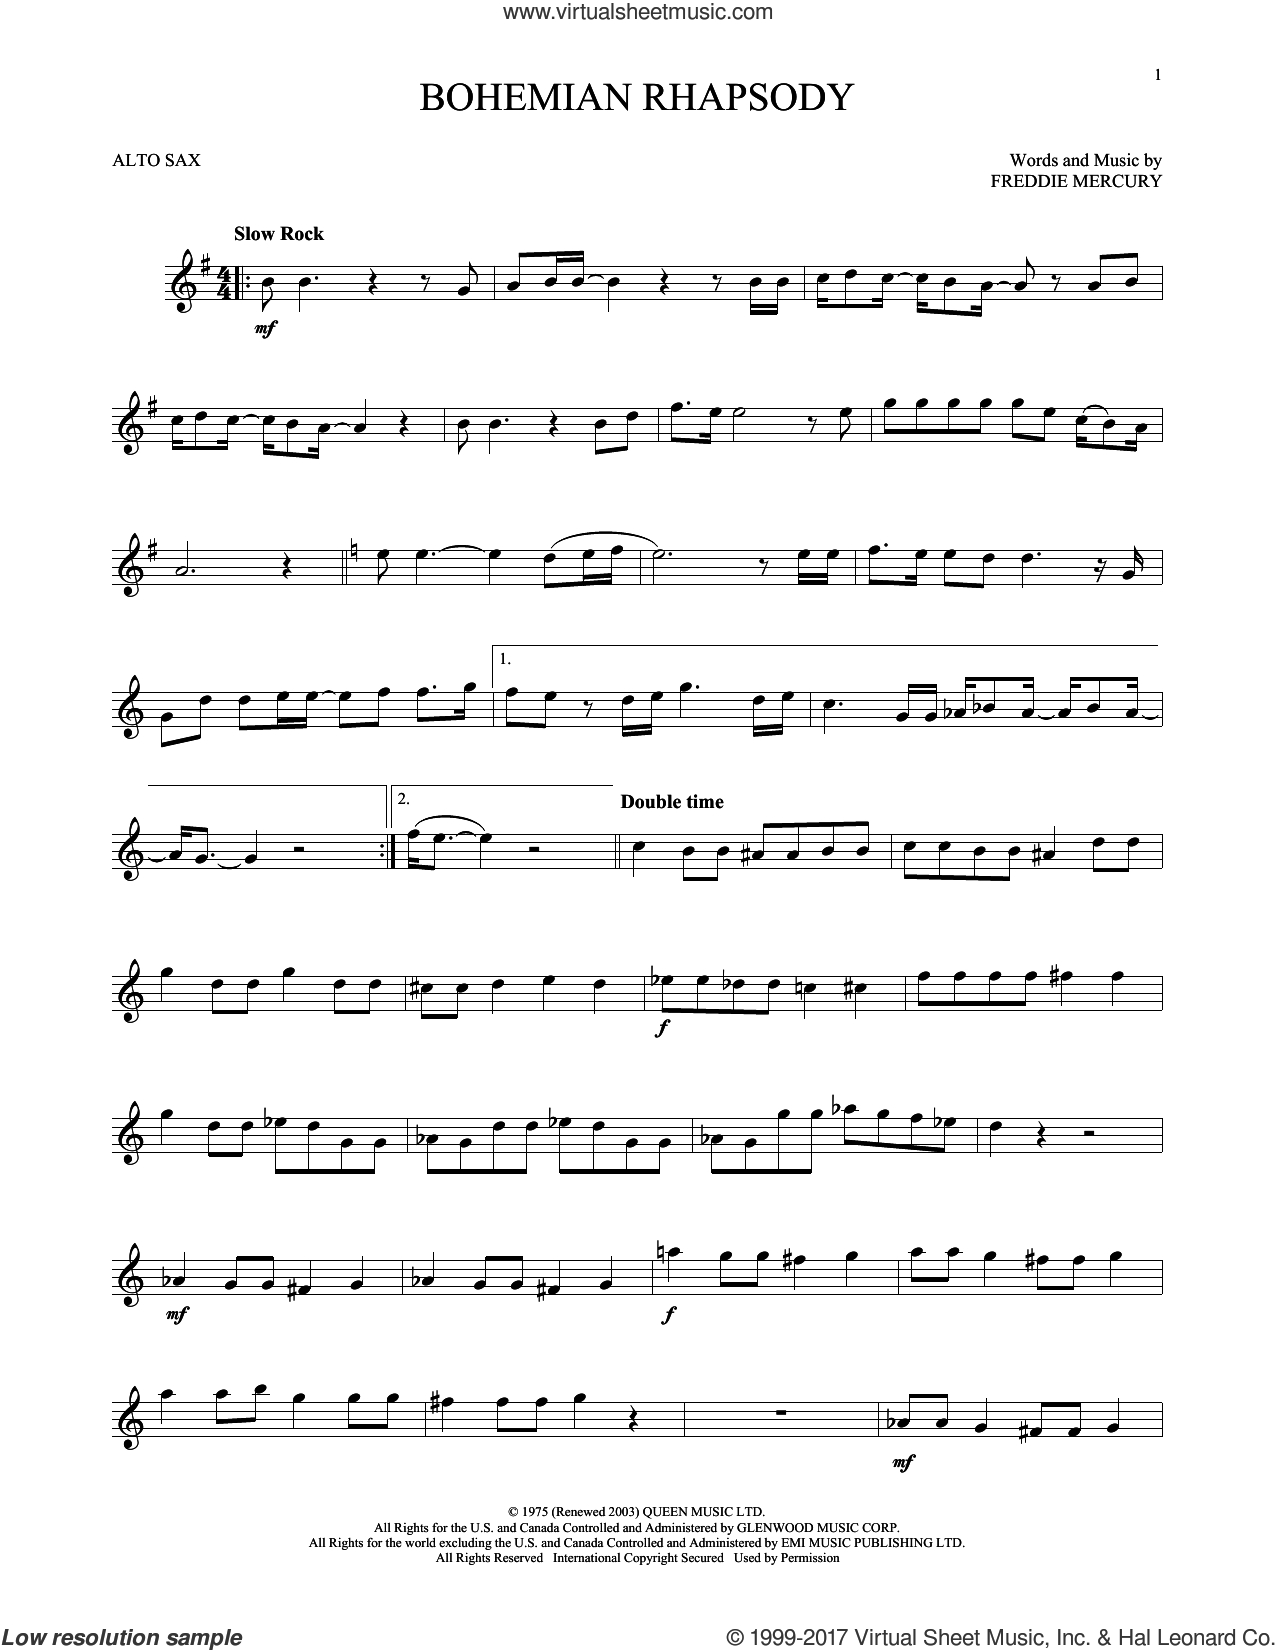 Queen - Bohemian Rhapsody Sheet Music For Alto Saxophone Solo - Free Printable Alto Saxophone Sheet Music